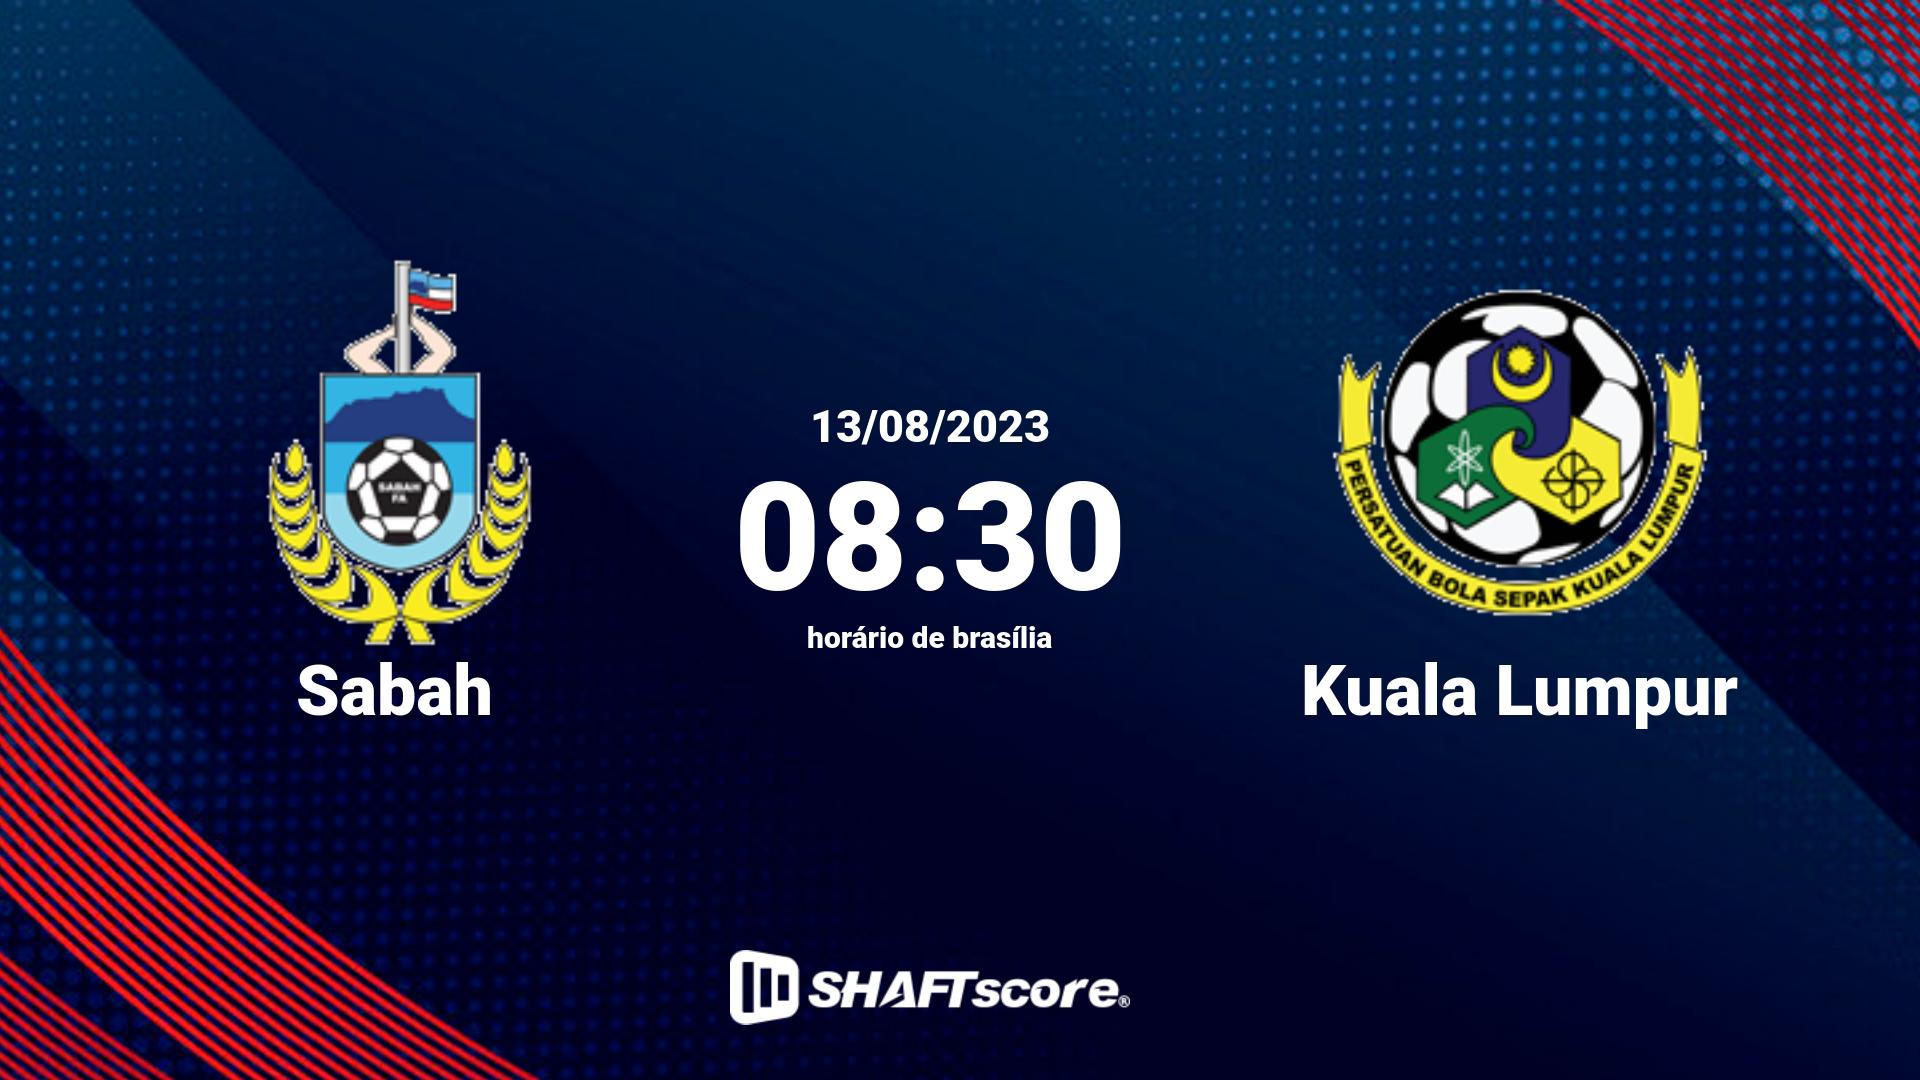 Estatísticas do jogo Sabah vs Kuala Lumpur 13.08 08:30